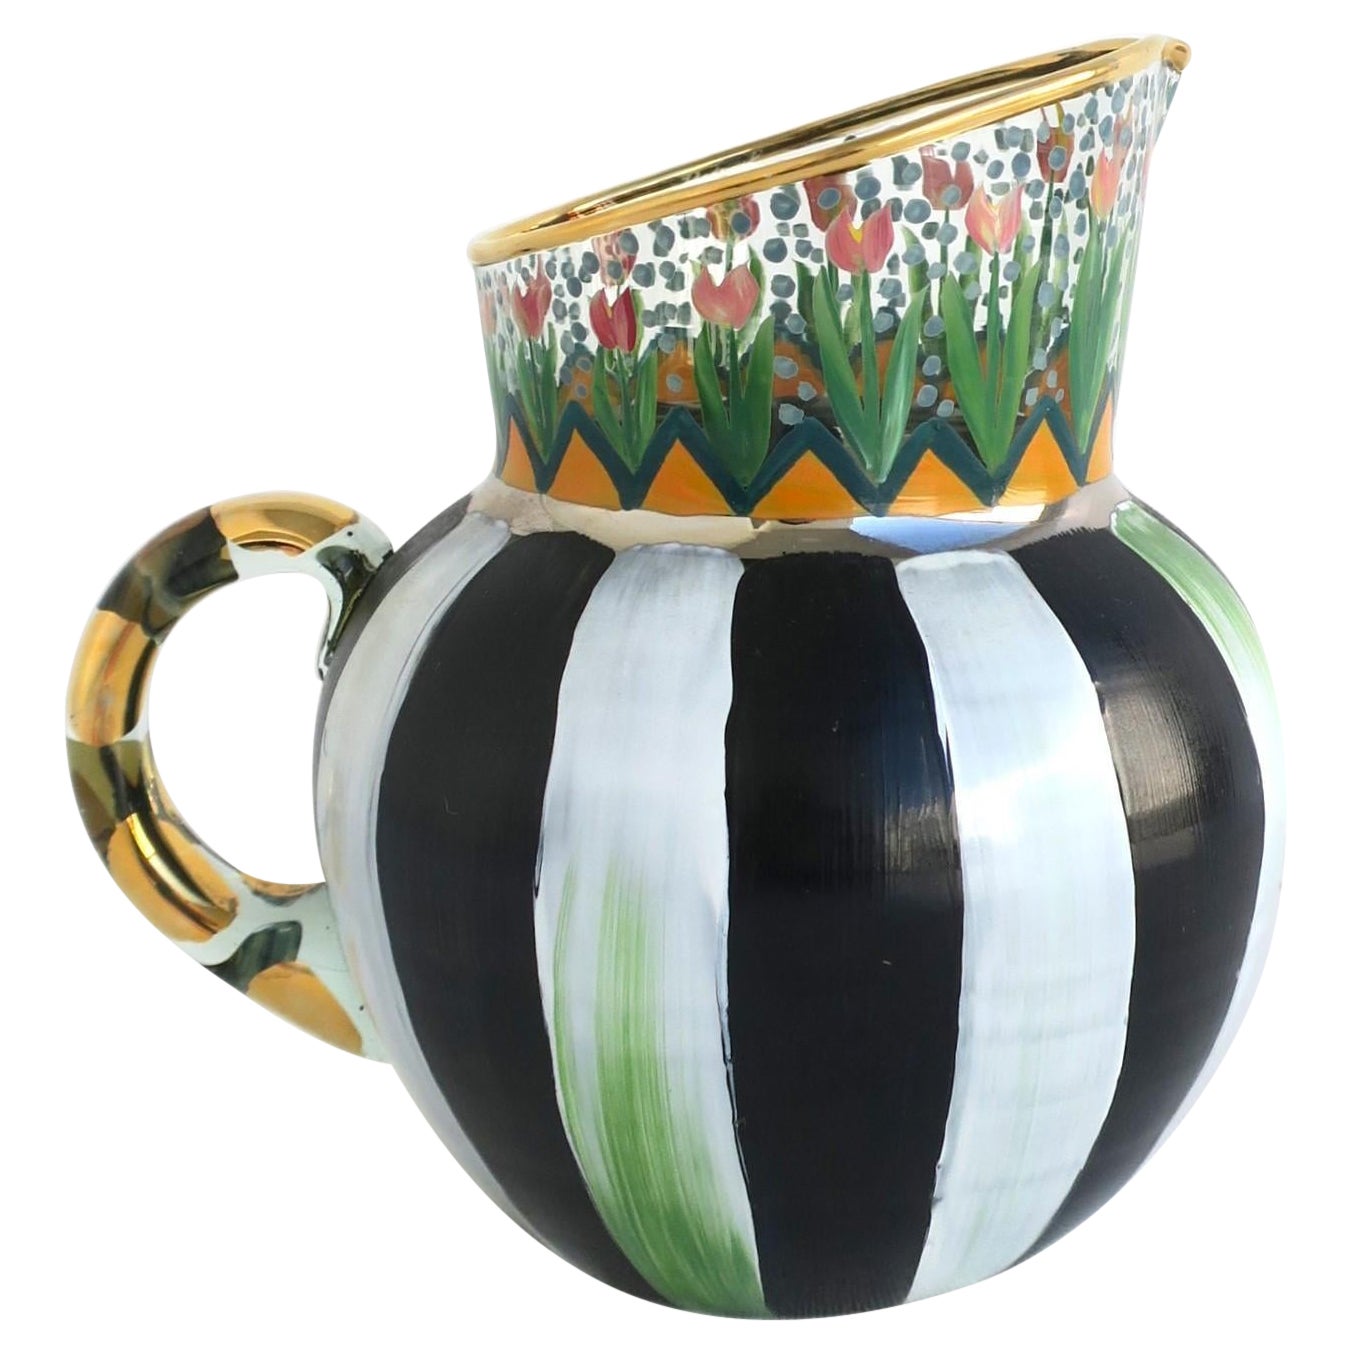 Mackenzie Childs Art Glass Pitcher or Vase with Garden Design, circa 1990s For Sale